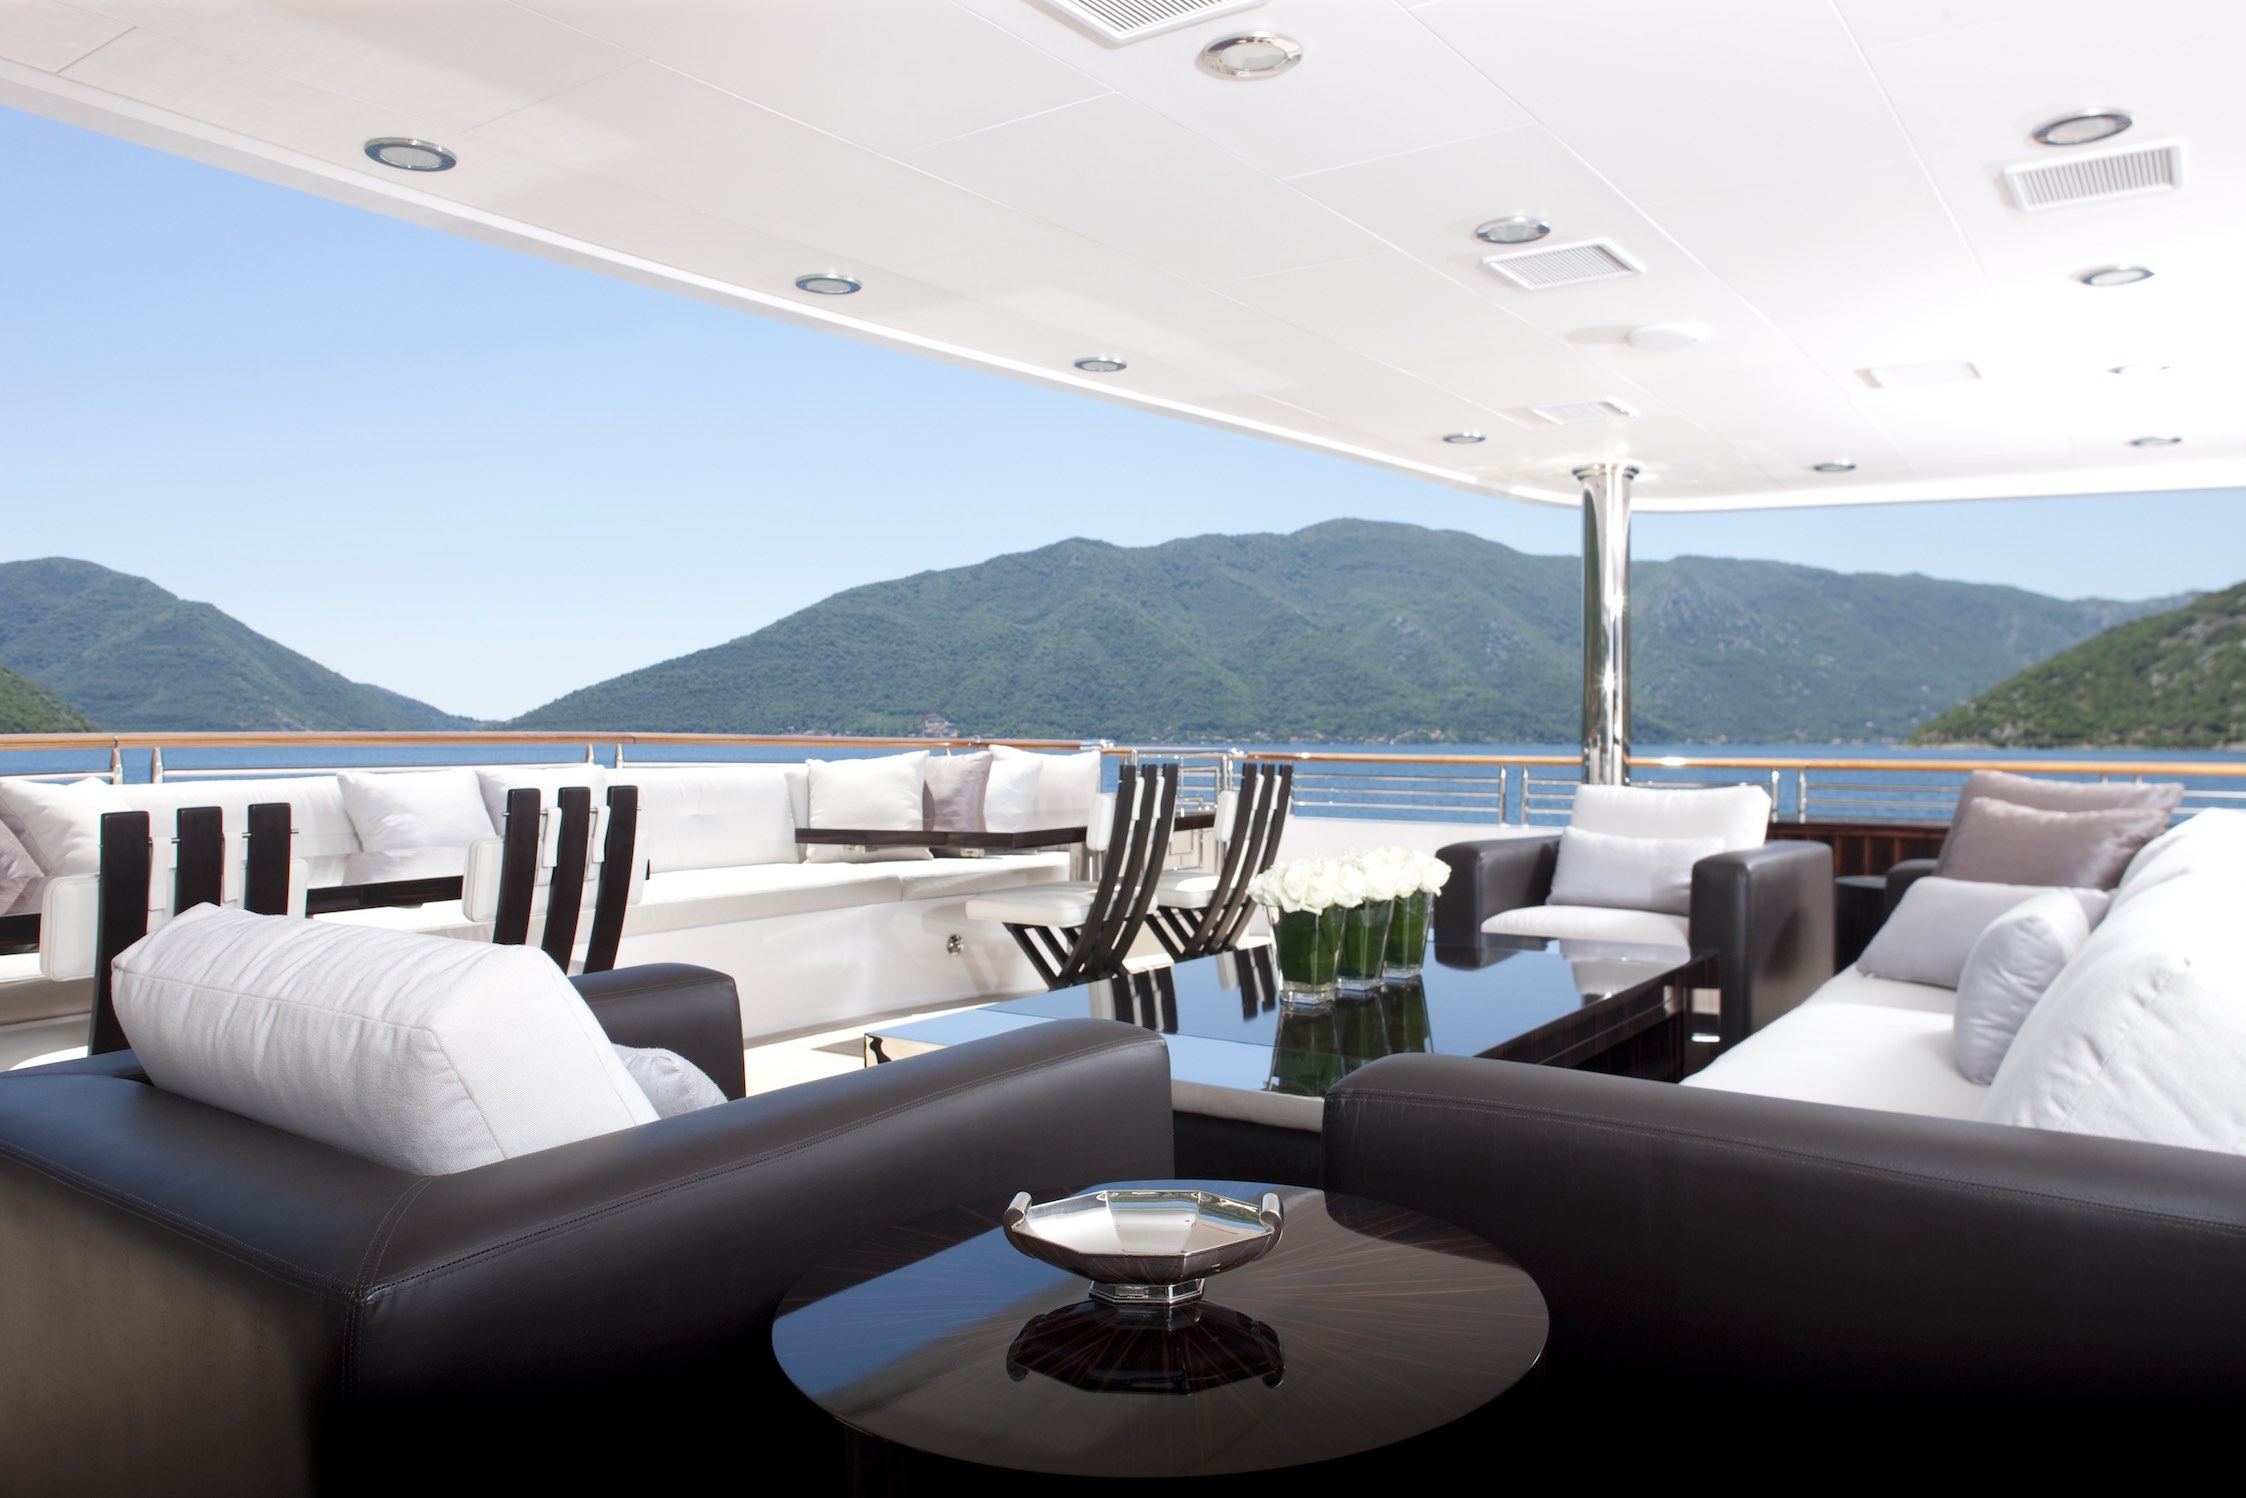 Carpe Diem Luxury Yacht exterior lounge